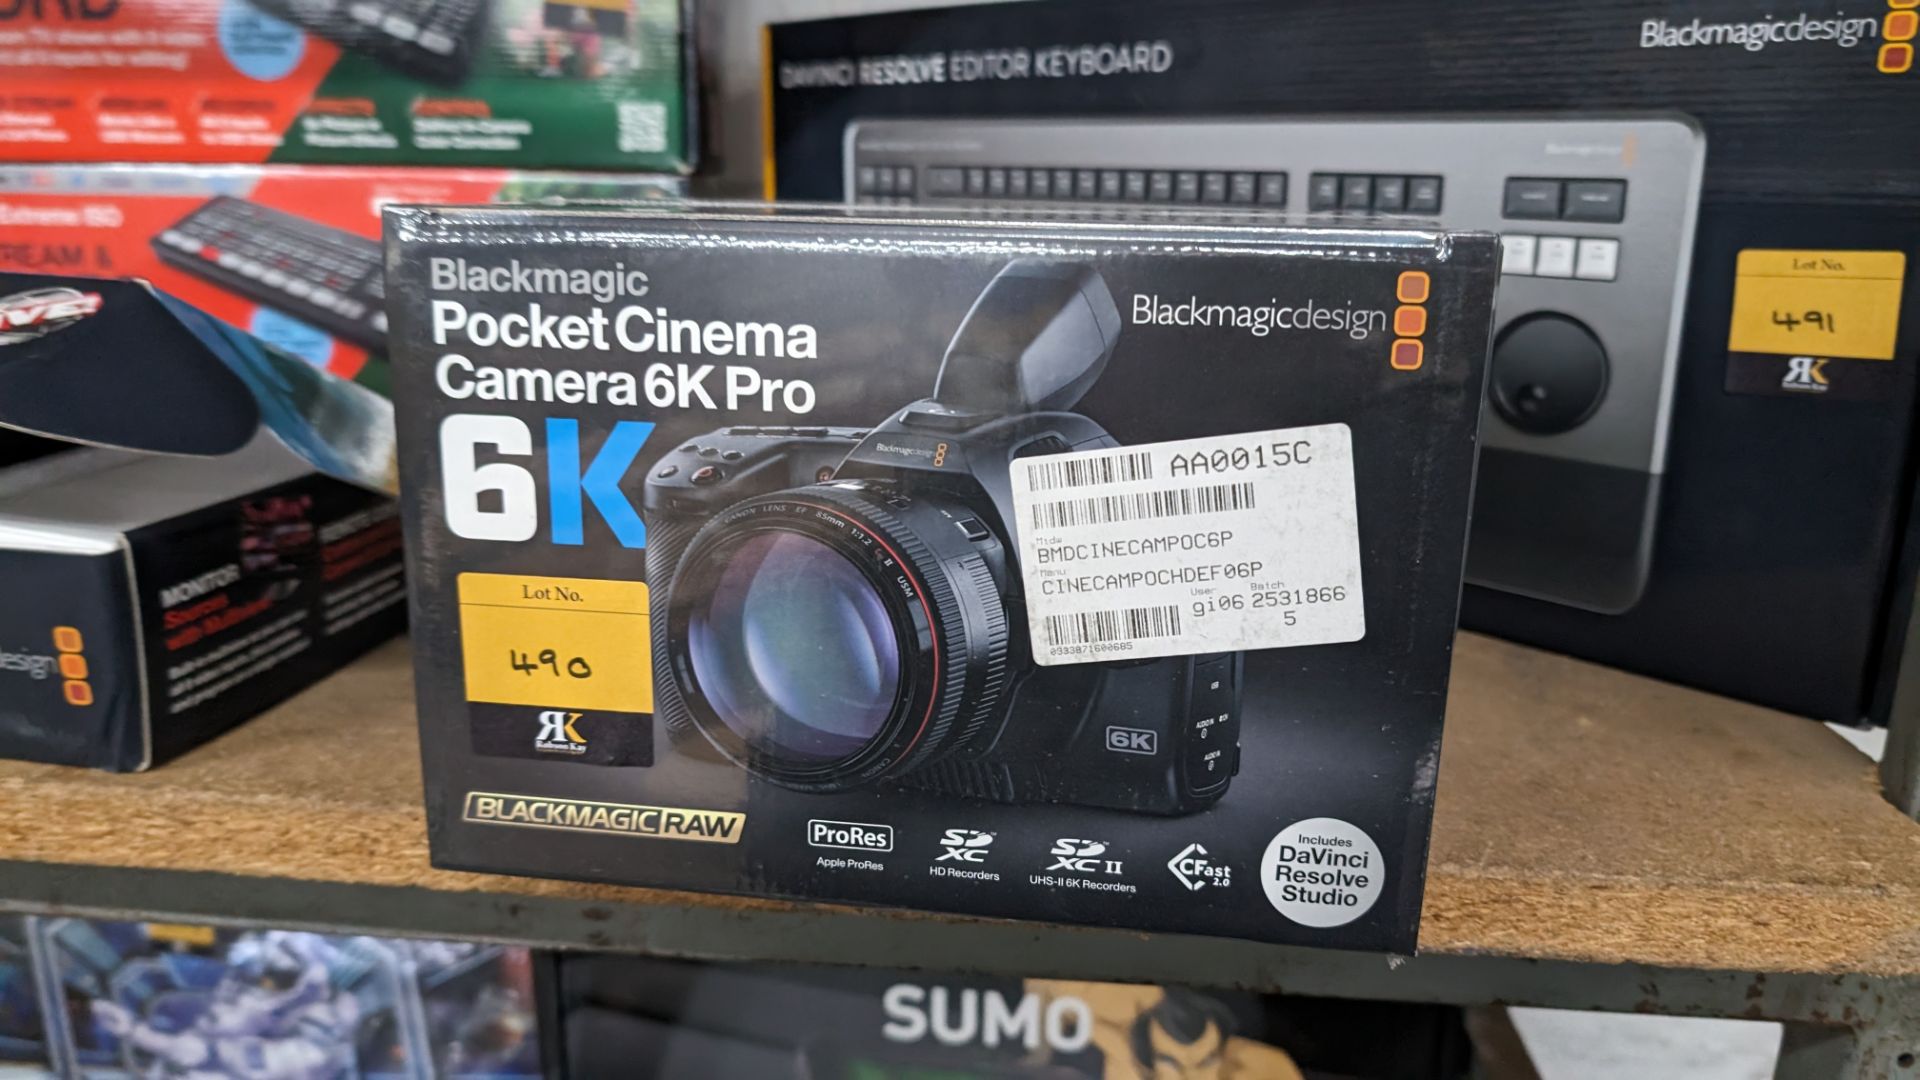 Blackmagic pocket cinema camera, 6K pro - Image 2 of 6